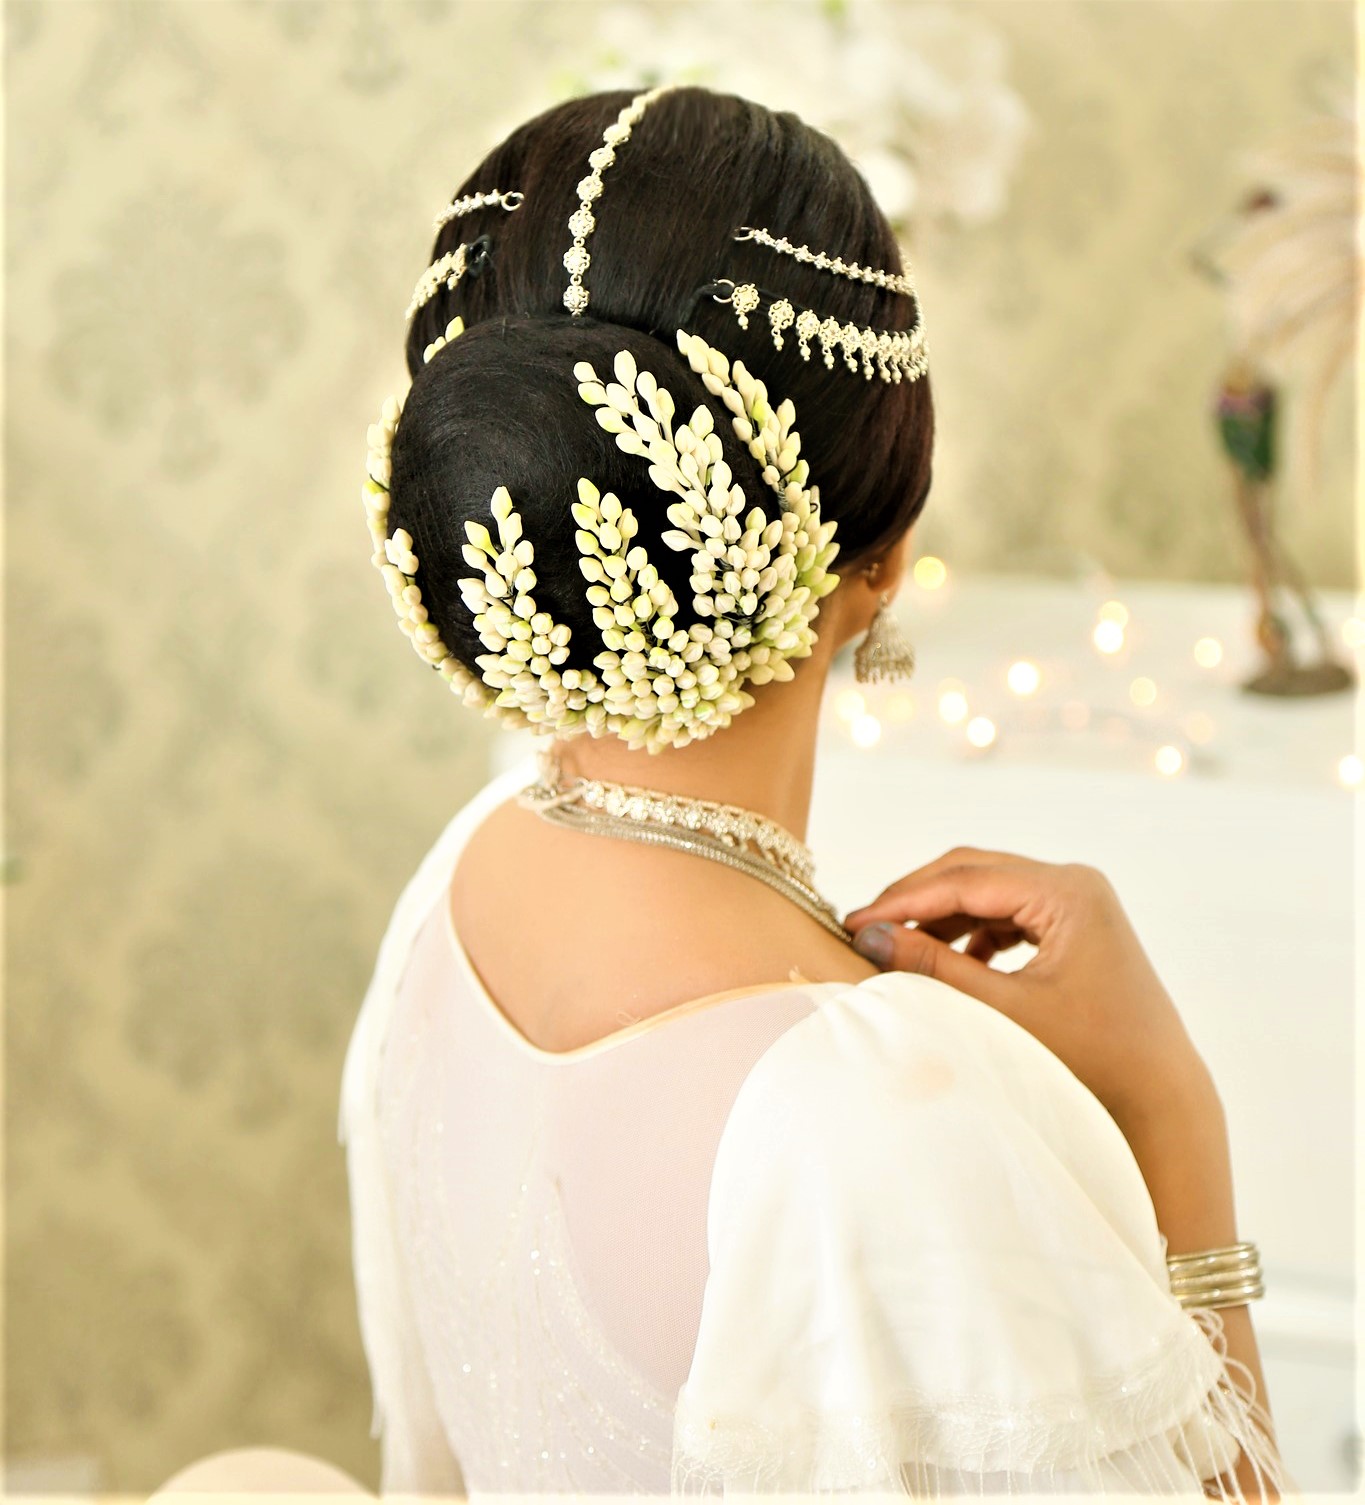 Bridal hair style by salon shani's... - Salon Shani's Pvt Ltd | Facebook